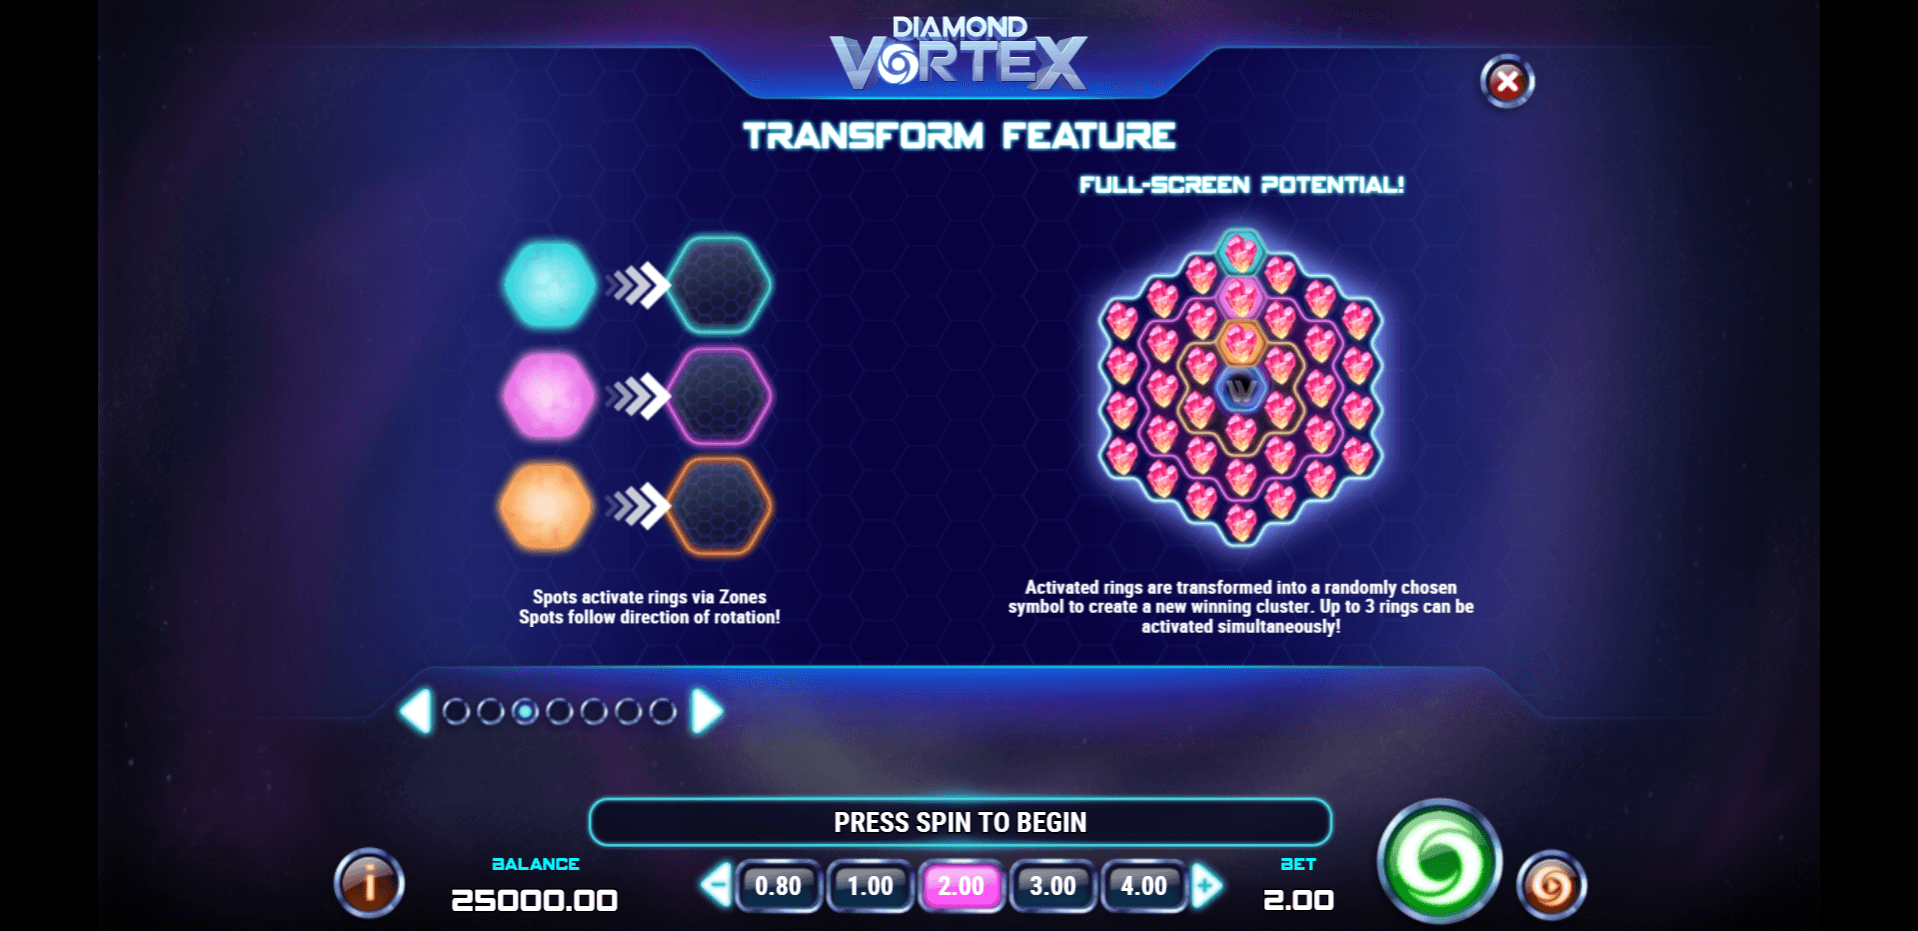 diamond vortex slot machine detail image 2